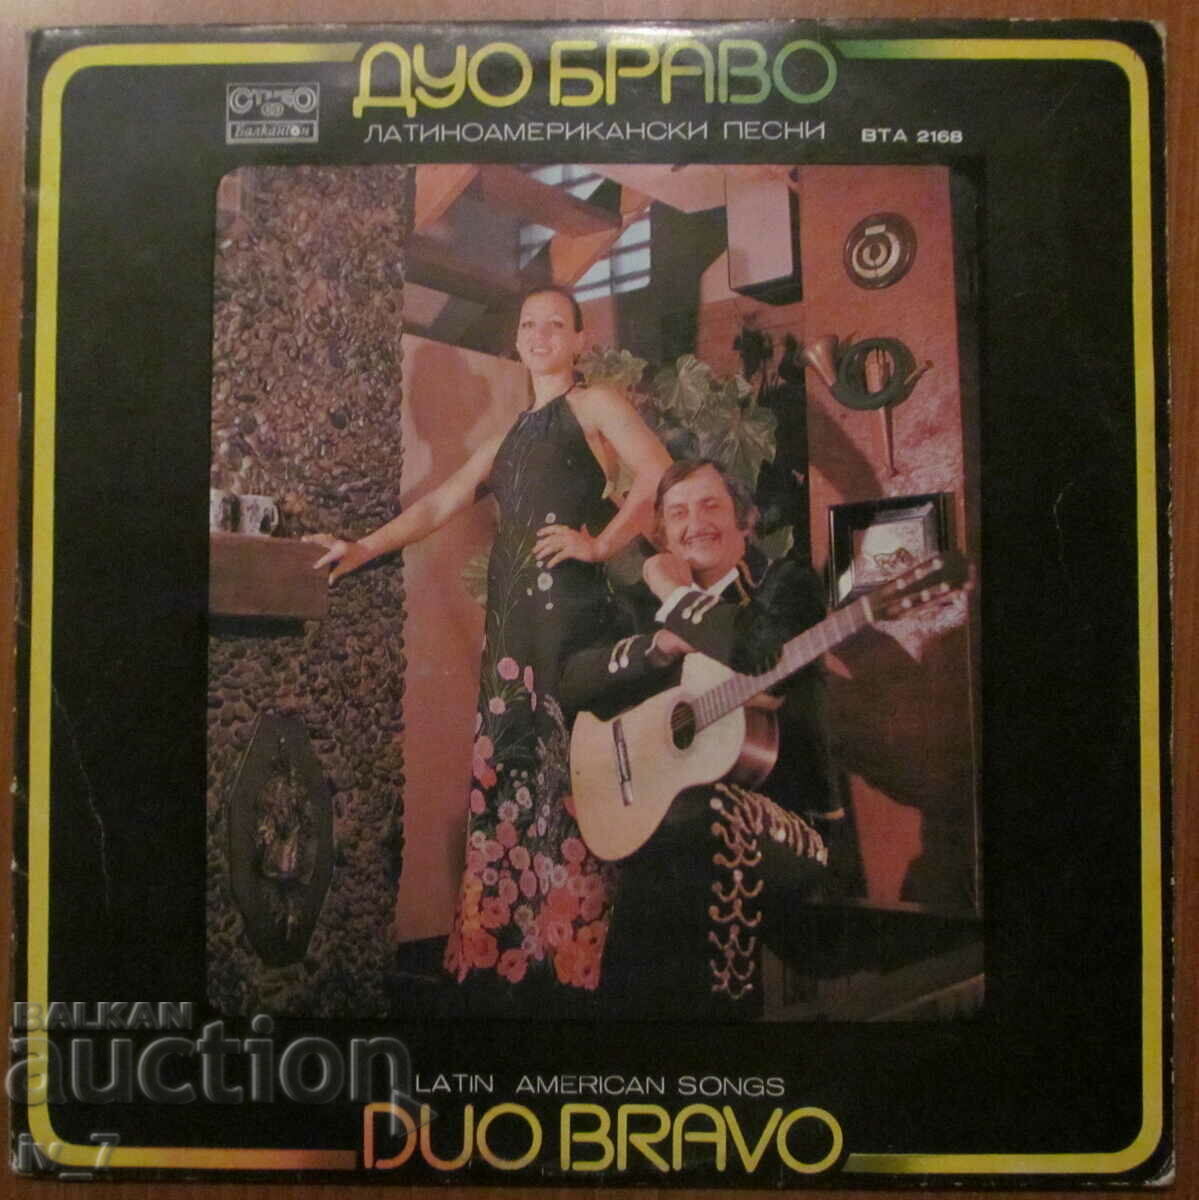 RECORD - DUO BRAVO, large format